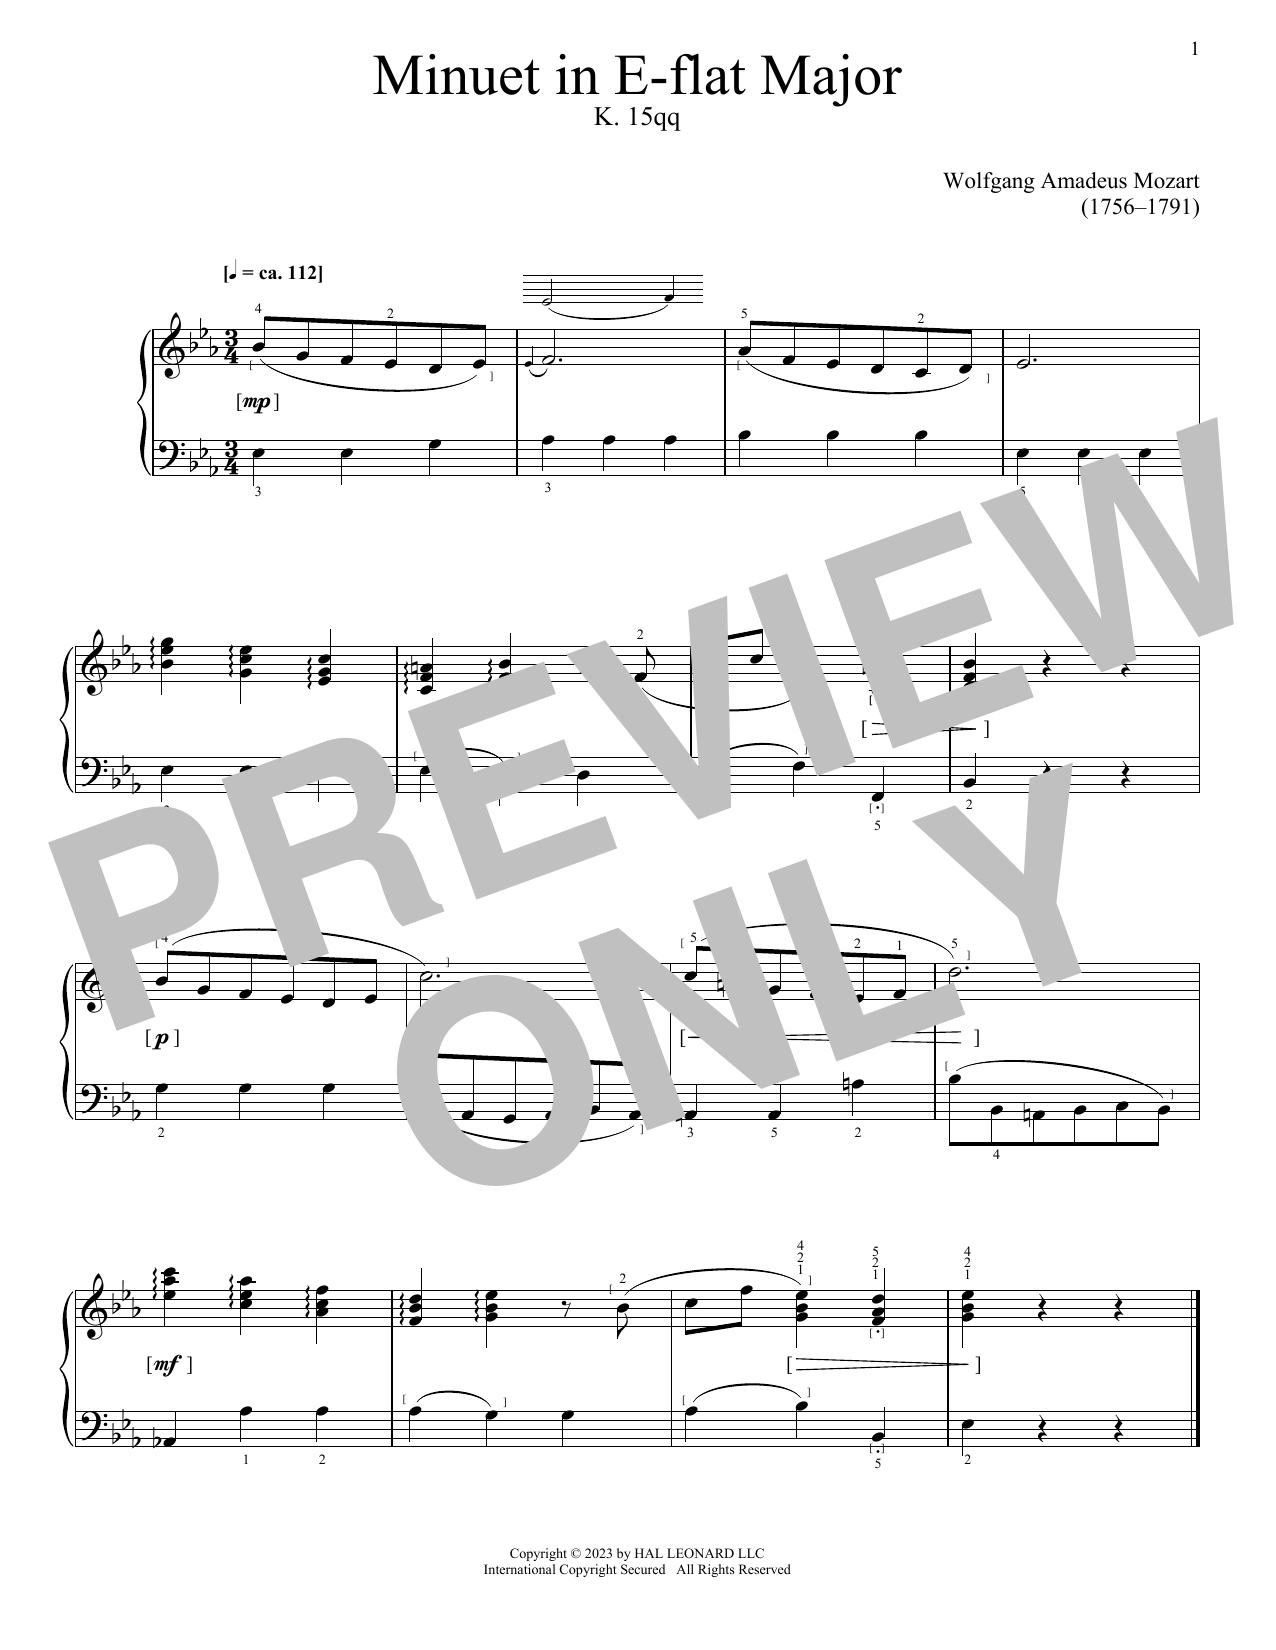 Download Woflgang Amadeus Mozart Air, K. 15qq Sheet Music